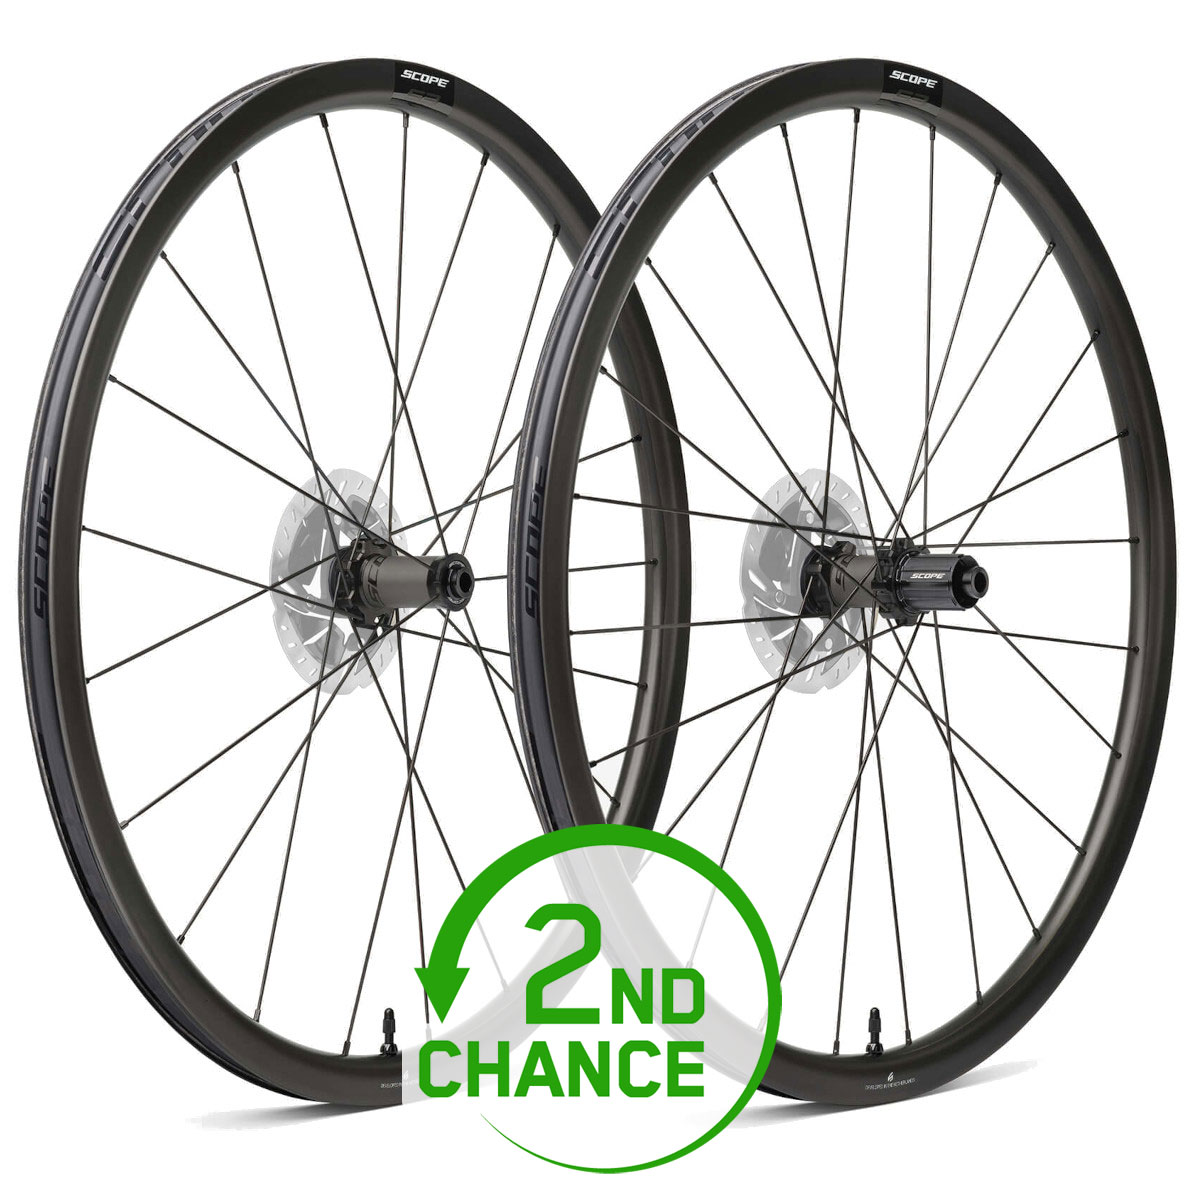 Productfoto van Scope Cycling S3 Disc - Carbon Wheelset - Centerlock - 12x100mm | 12x142mm - SRAM XDR - 2nd Choice